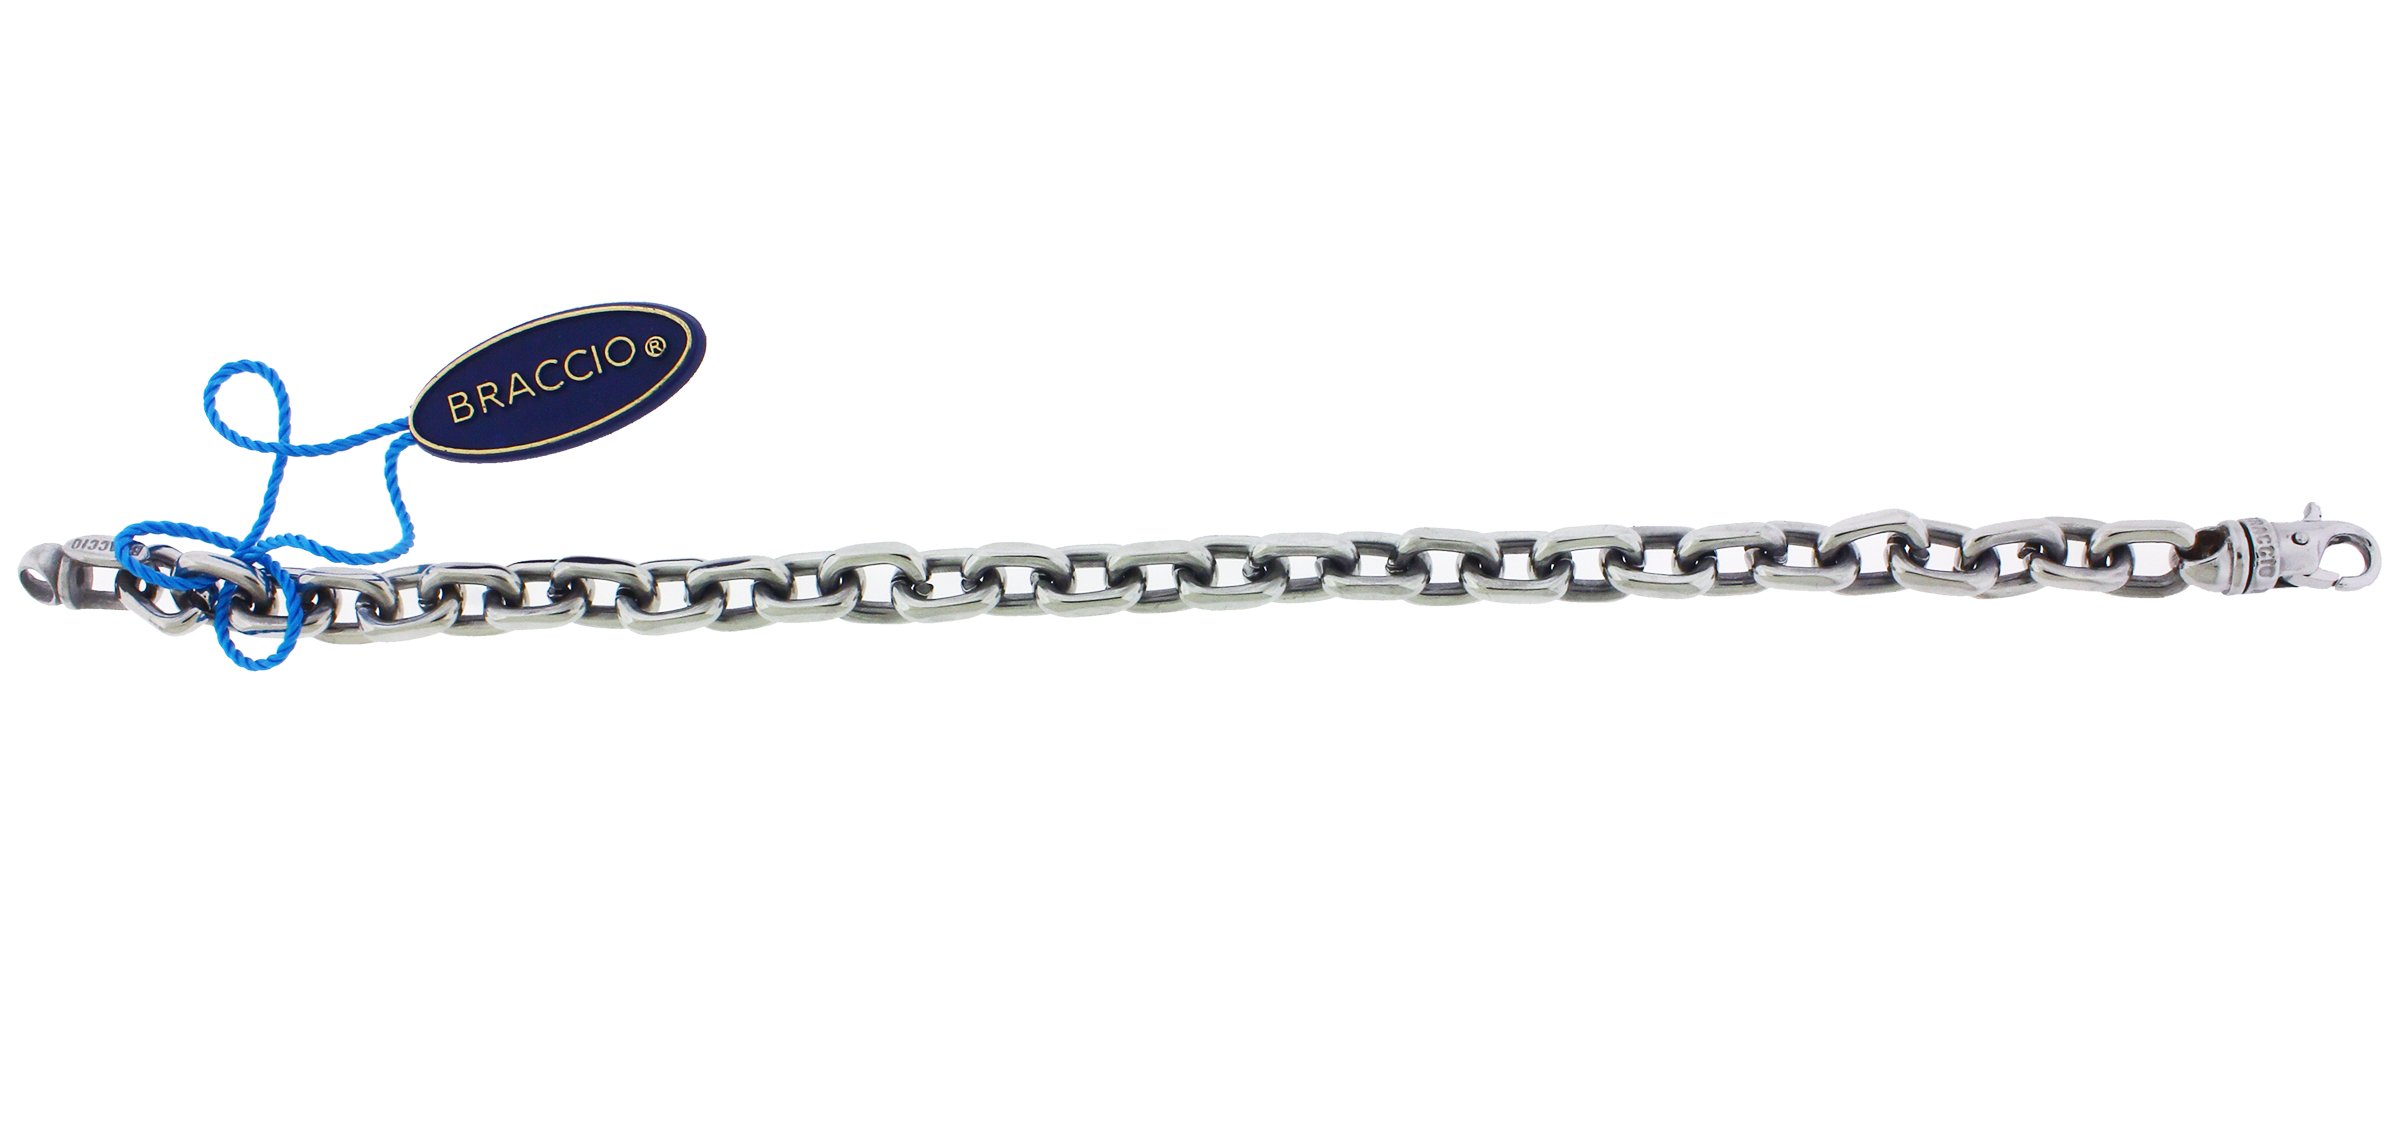 Braccio SS3090 - BR Men's heavy bracelet in Stainless Steel 8.5 inches